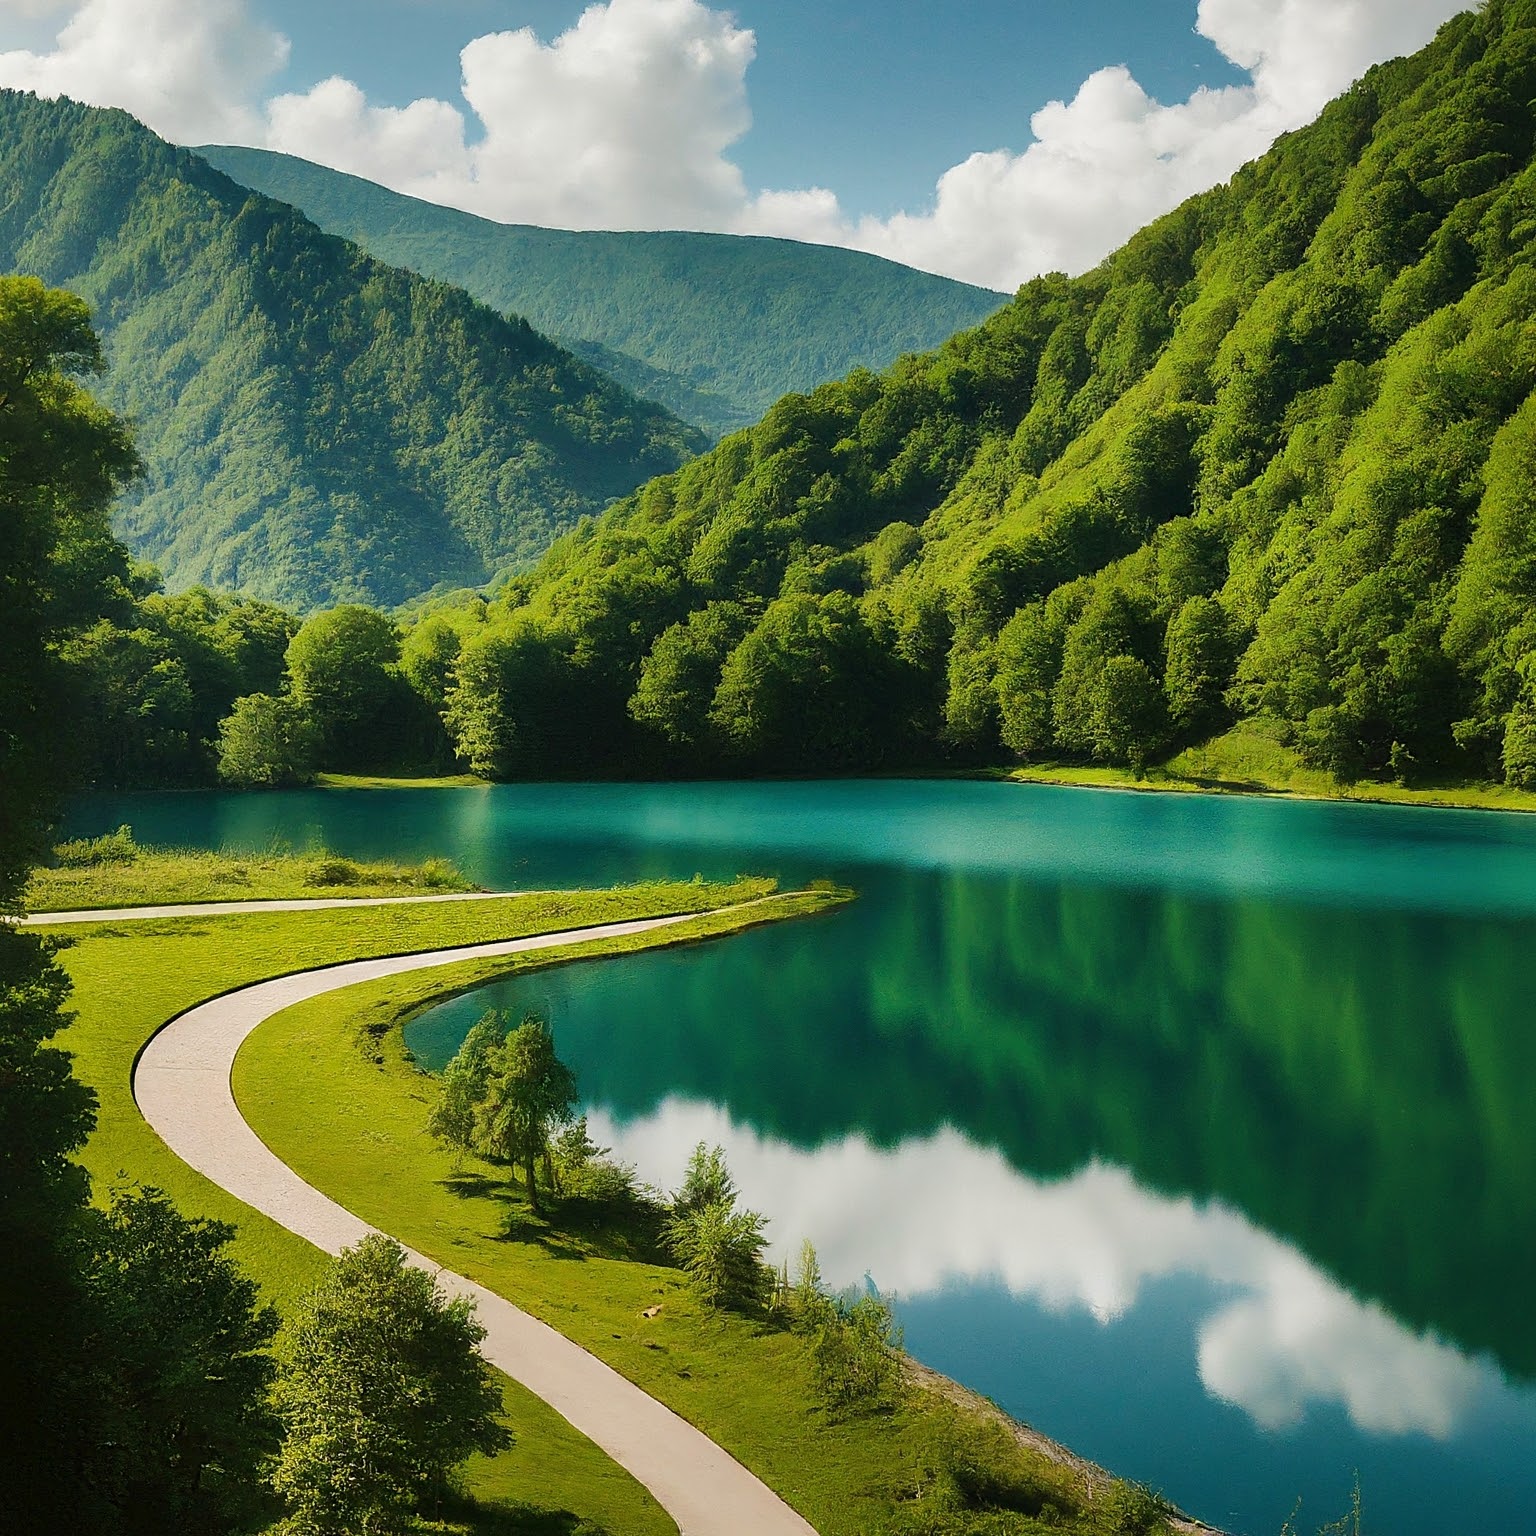 Lake Rizitsa, a tranquil lake surrounded by greenery and walking paths, in Gagra, Georgia.